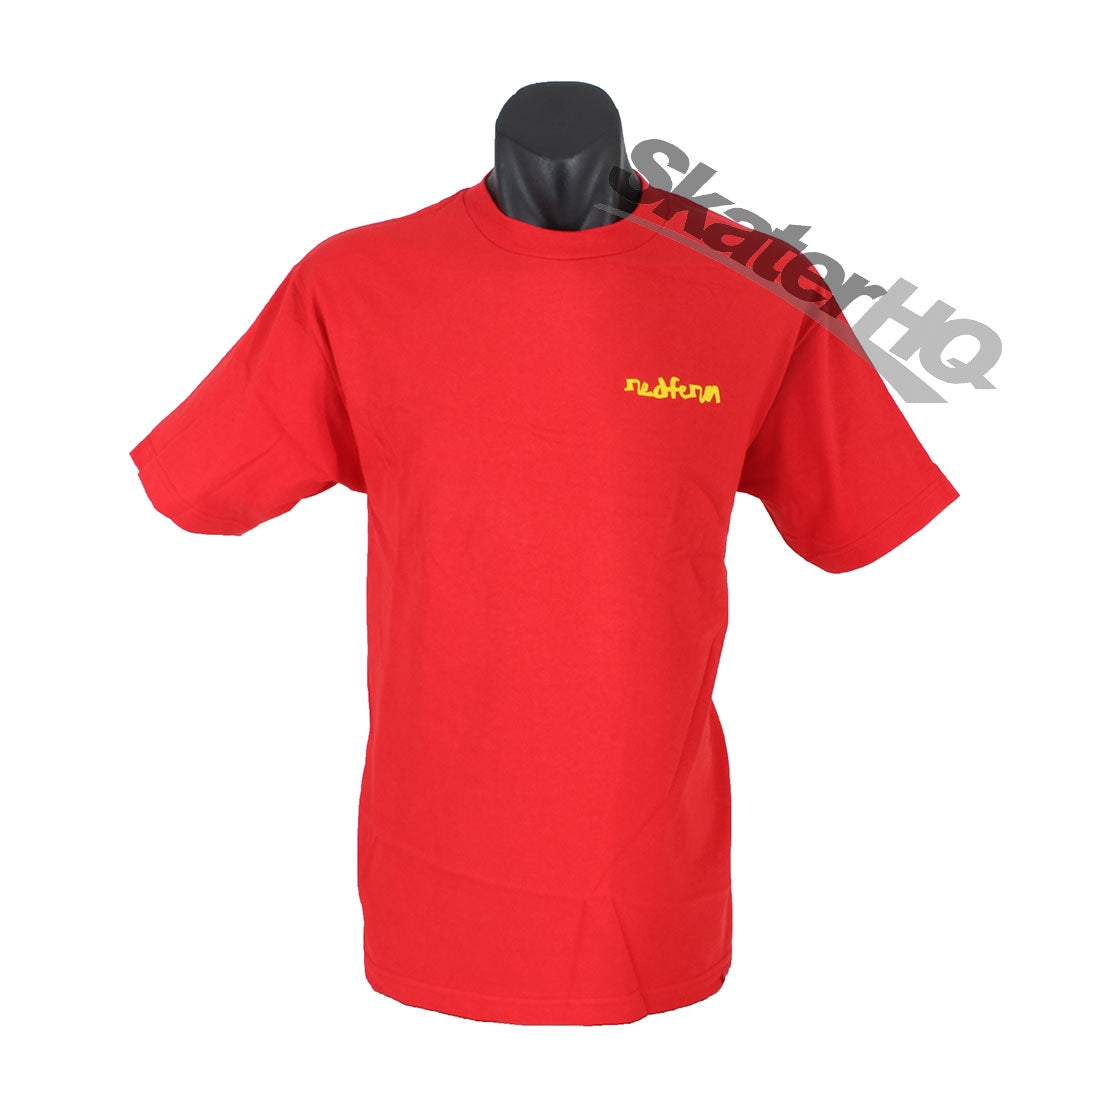 Chocolate C.T.W Redfern T-Shirt Red Large Apparel Tshirts